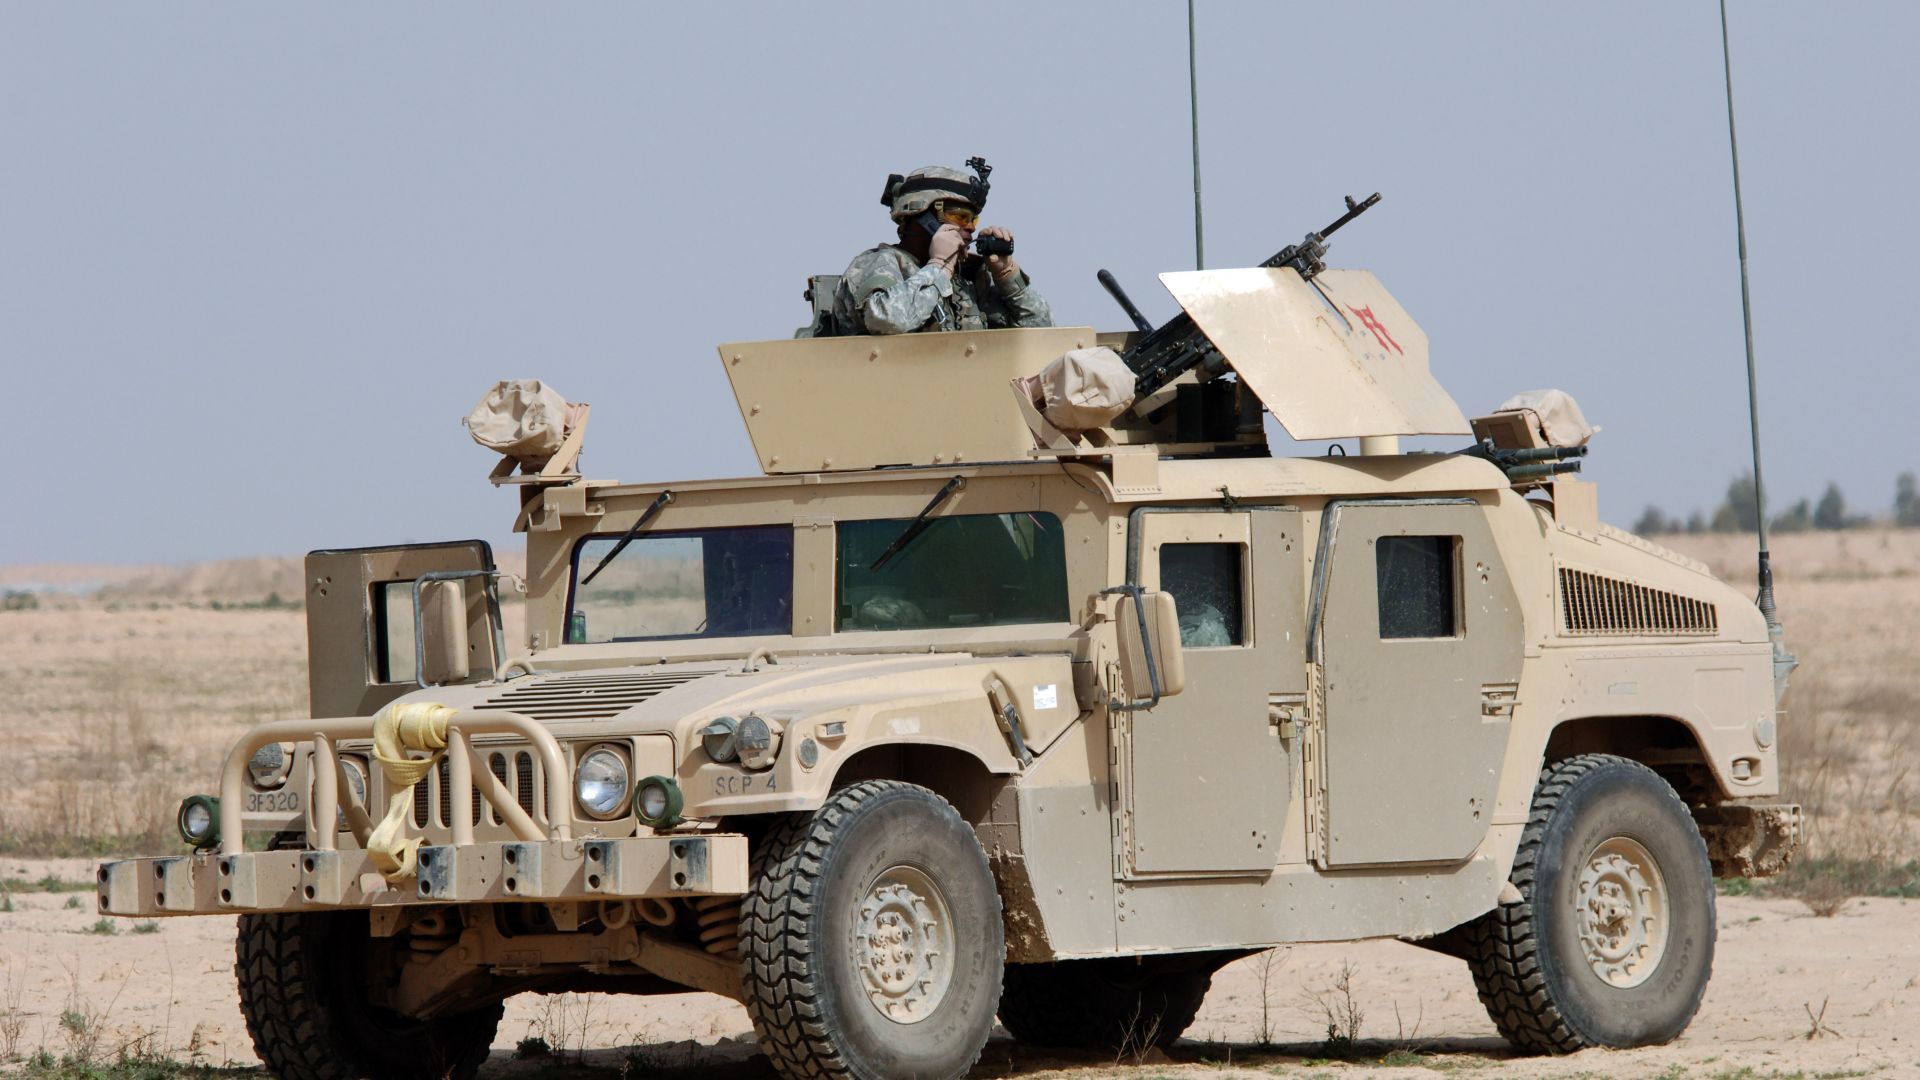 Хамви, легкий грузовик, Армия США, Humvee, light truck, United States military, U.S. Army (horizontal)